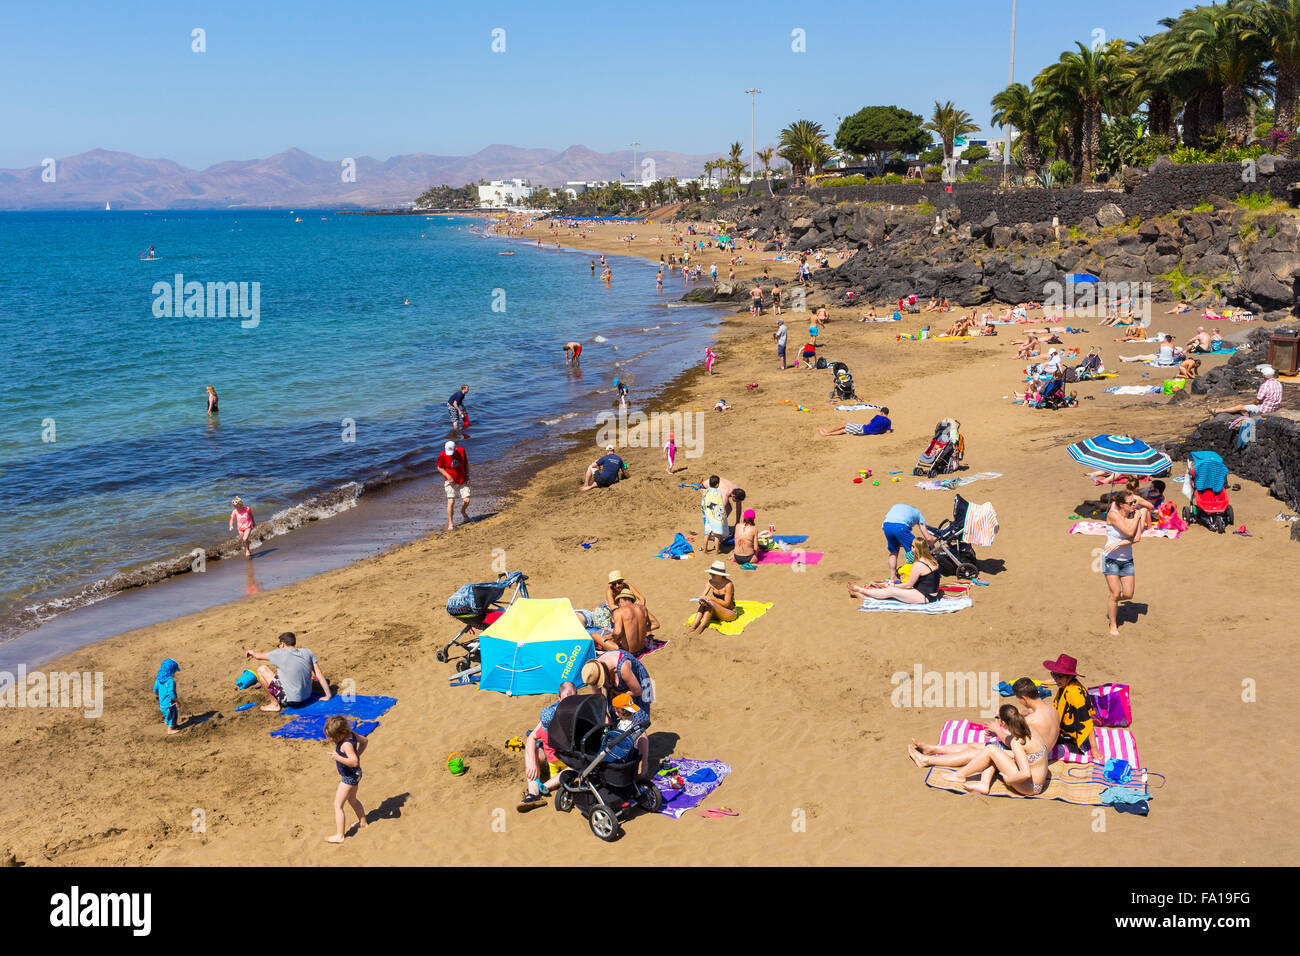 Playa Grande, la spiaggia cittadina di Puerto del Carmen, Lanzarote, Isole Canarie, Spagna, Europa meridionale Foto Stock